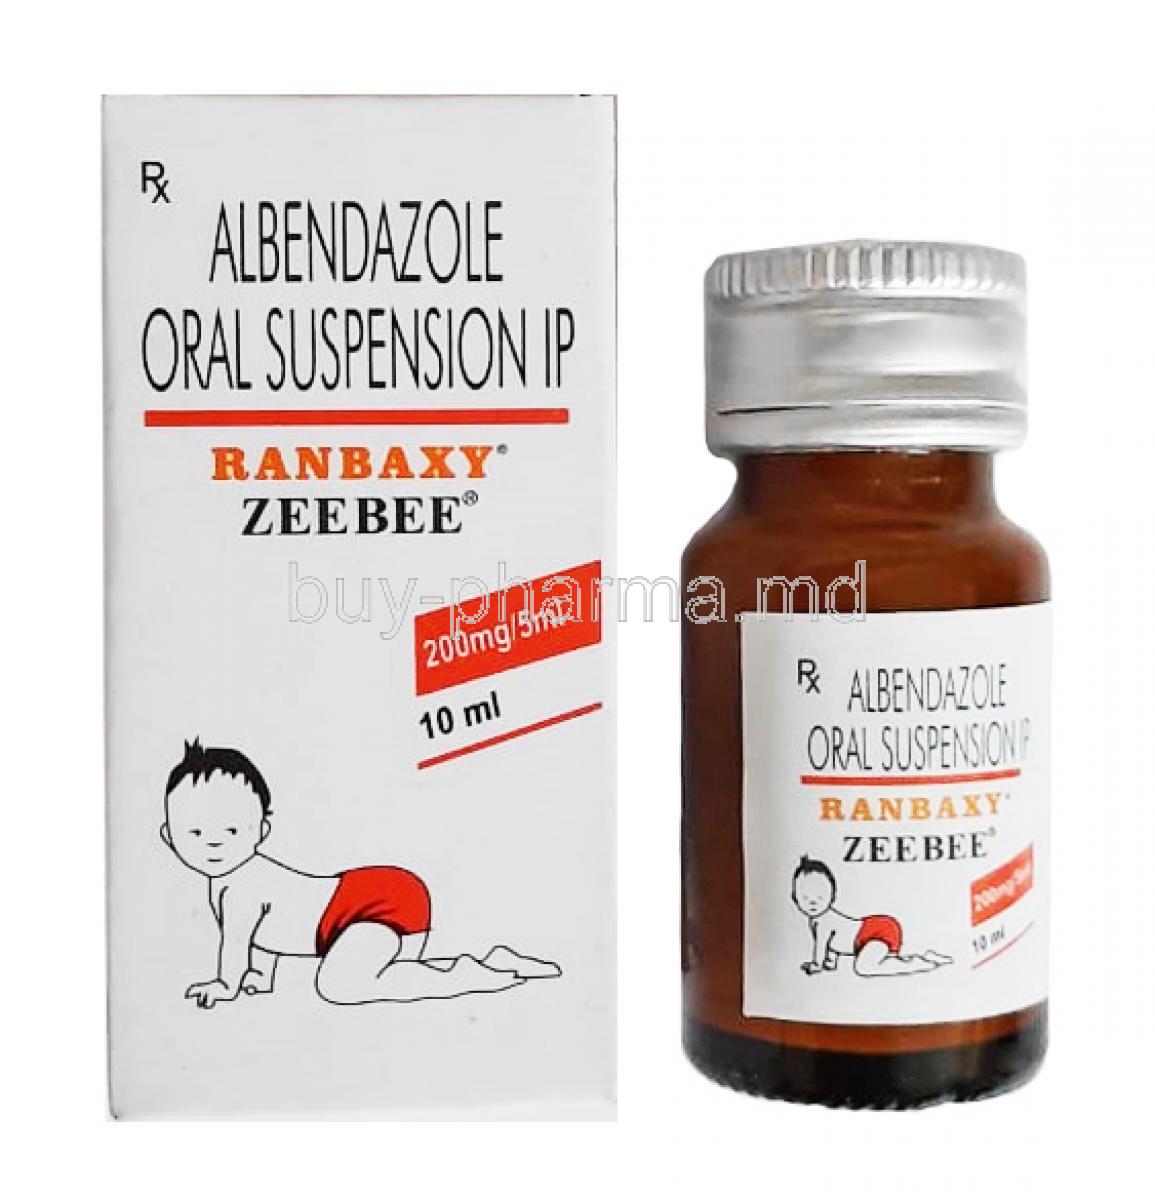 Zeebee Oral Suspension, Albendazole 200mg box and bottle